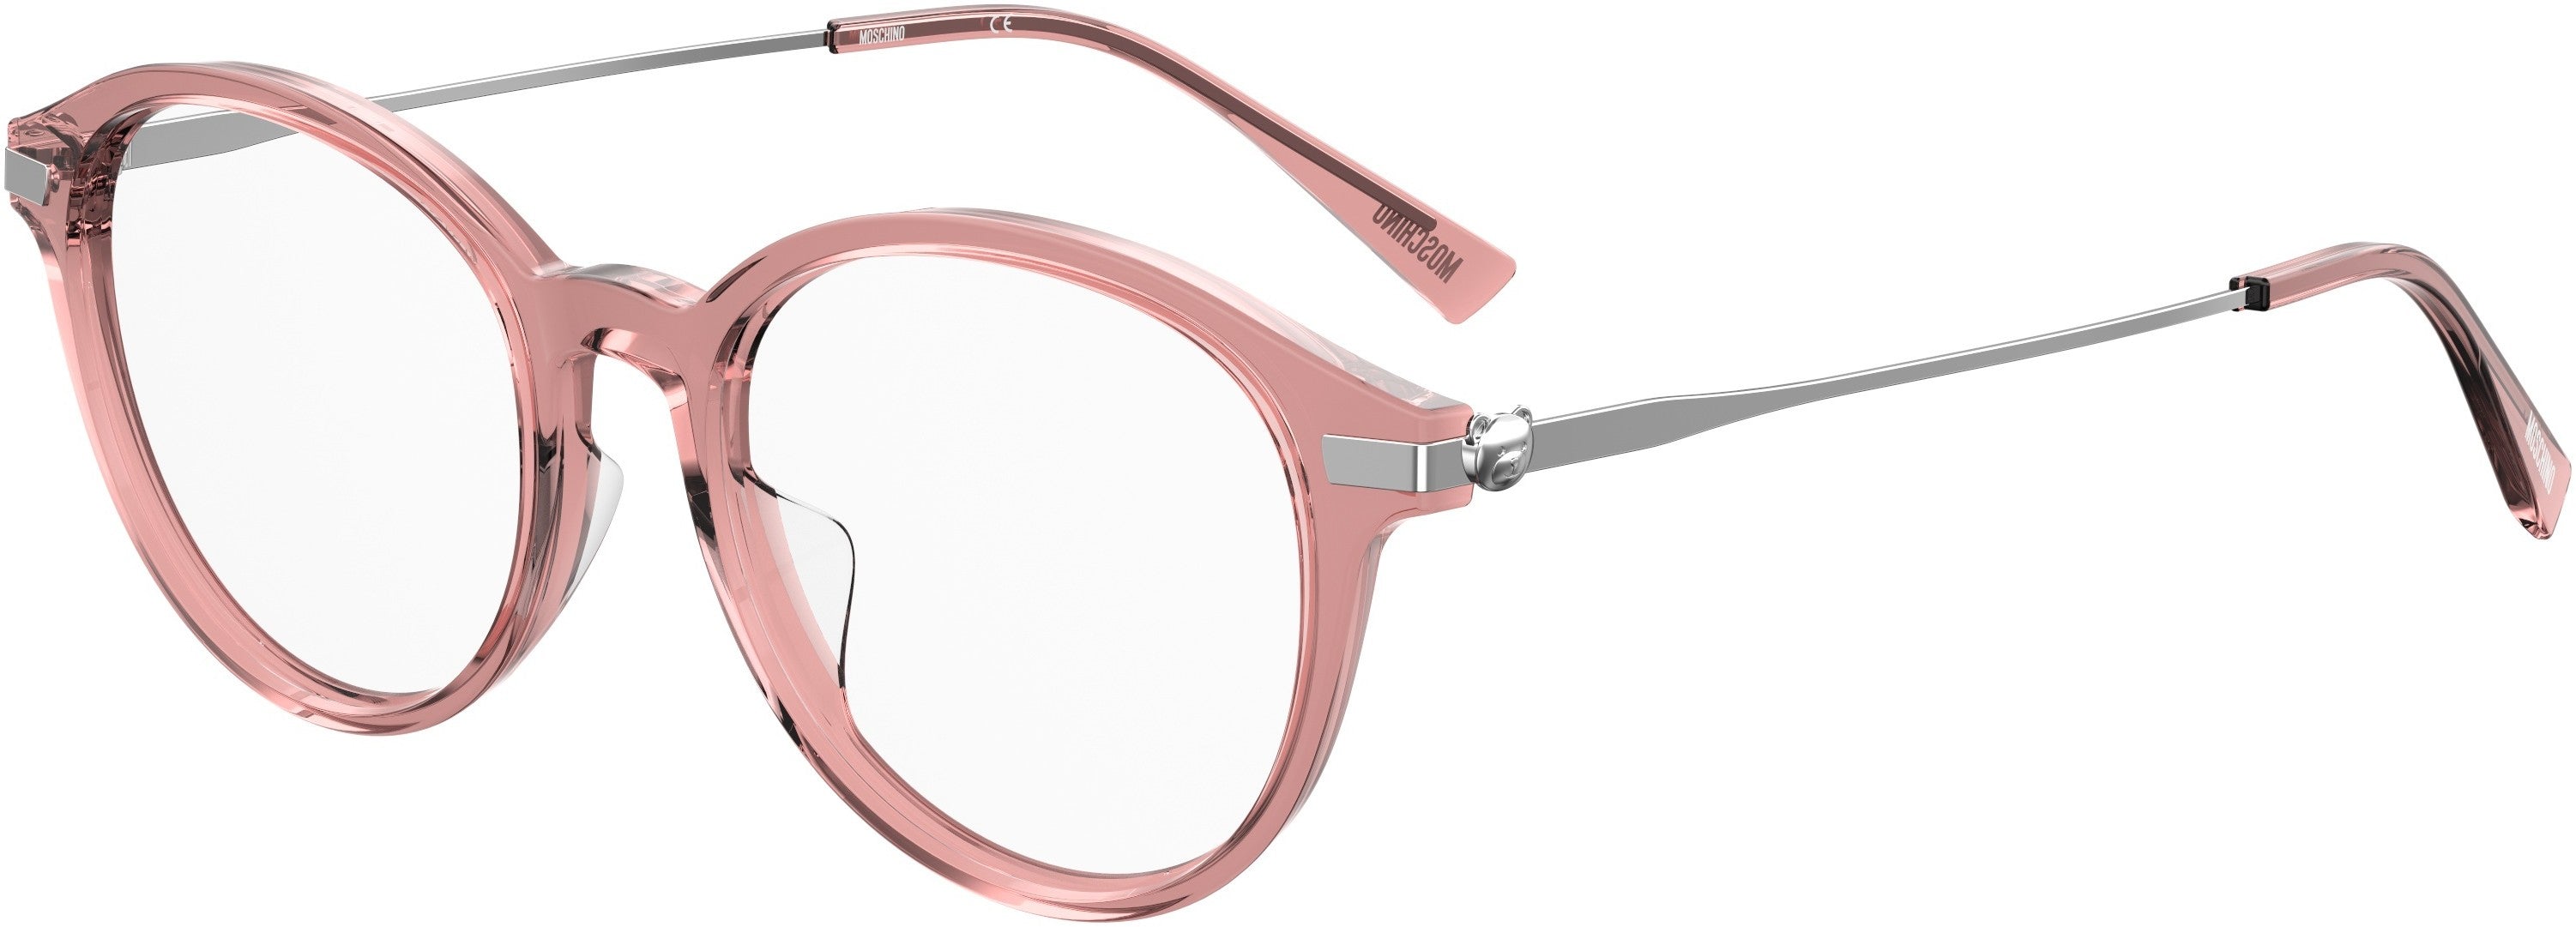  Moschino 566/F Tea Cup Eyeglasses 035J-035J  Pink (00 Demo Lens)